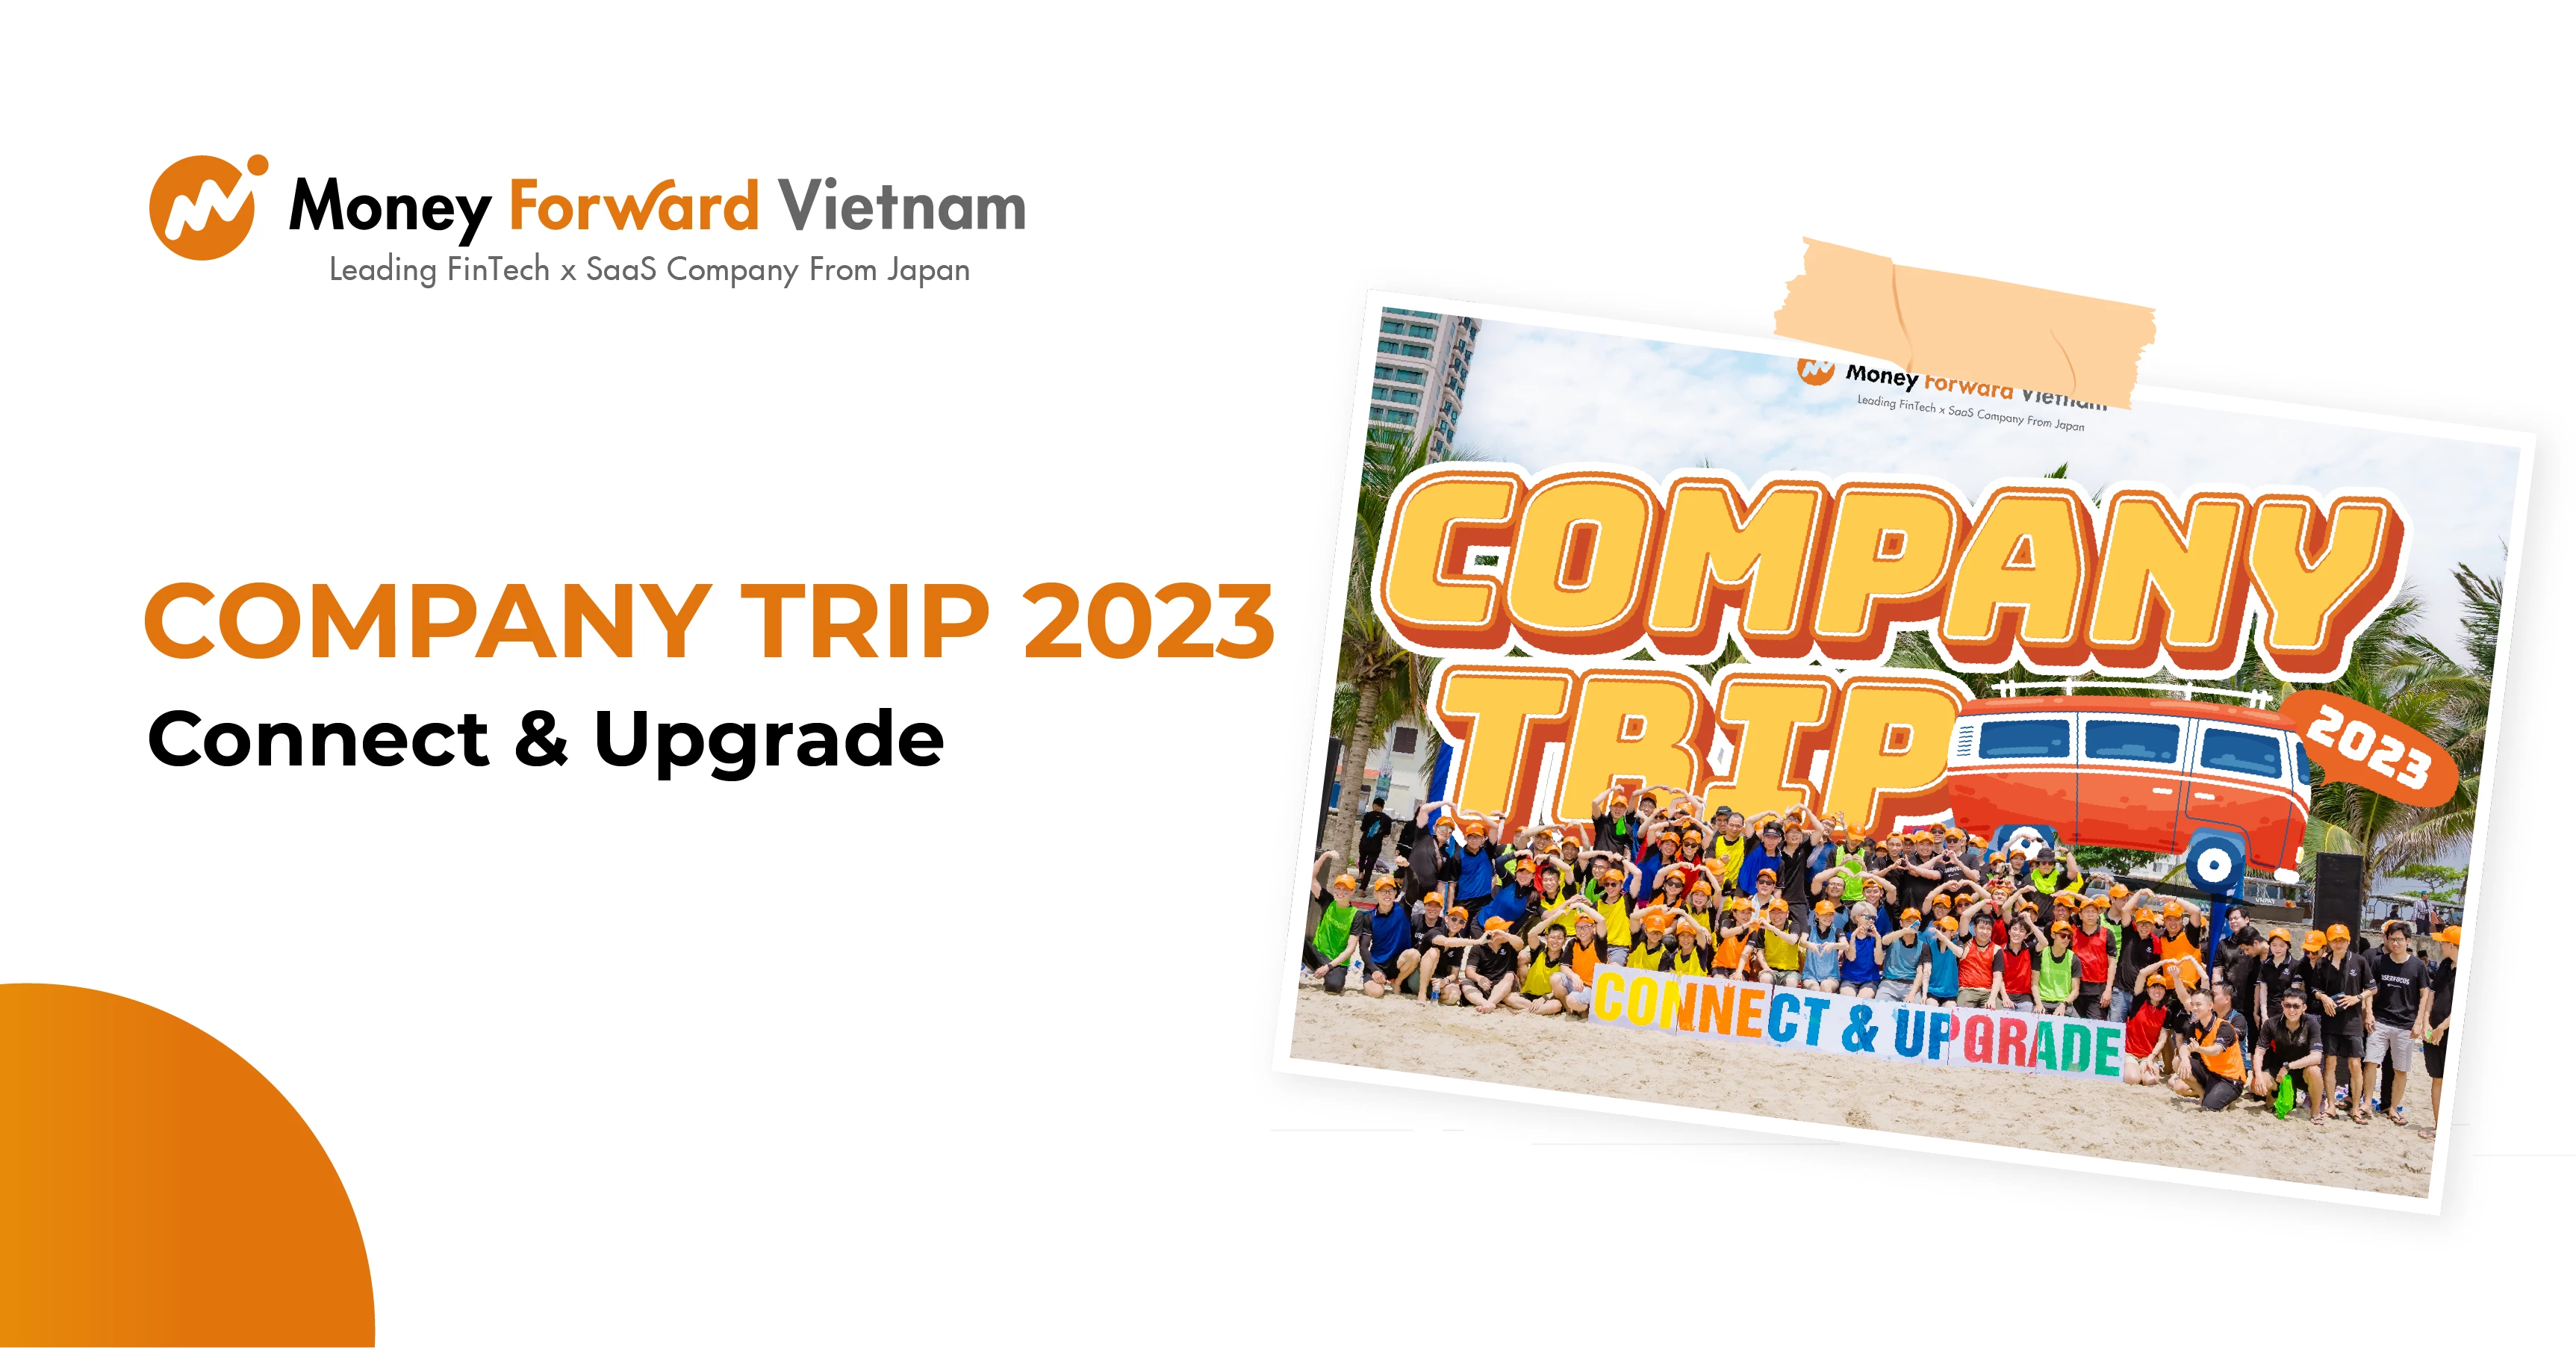 Company trip 2023 - Connect & Upgrade